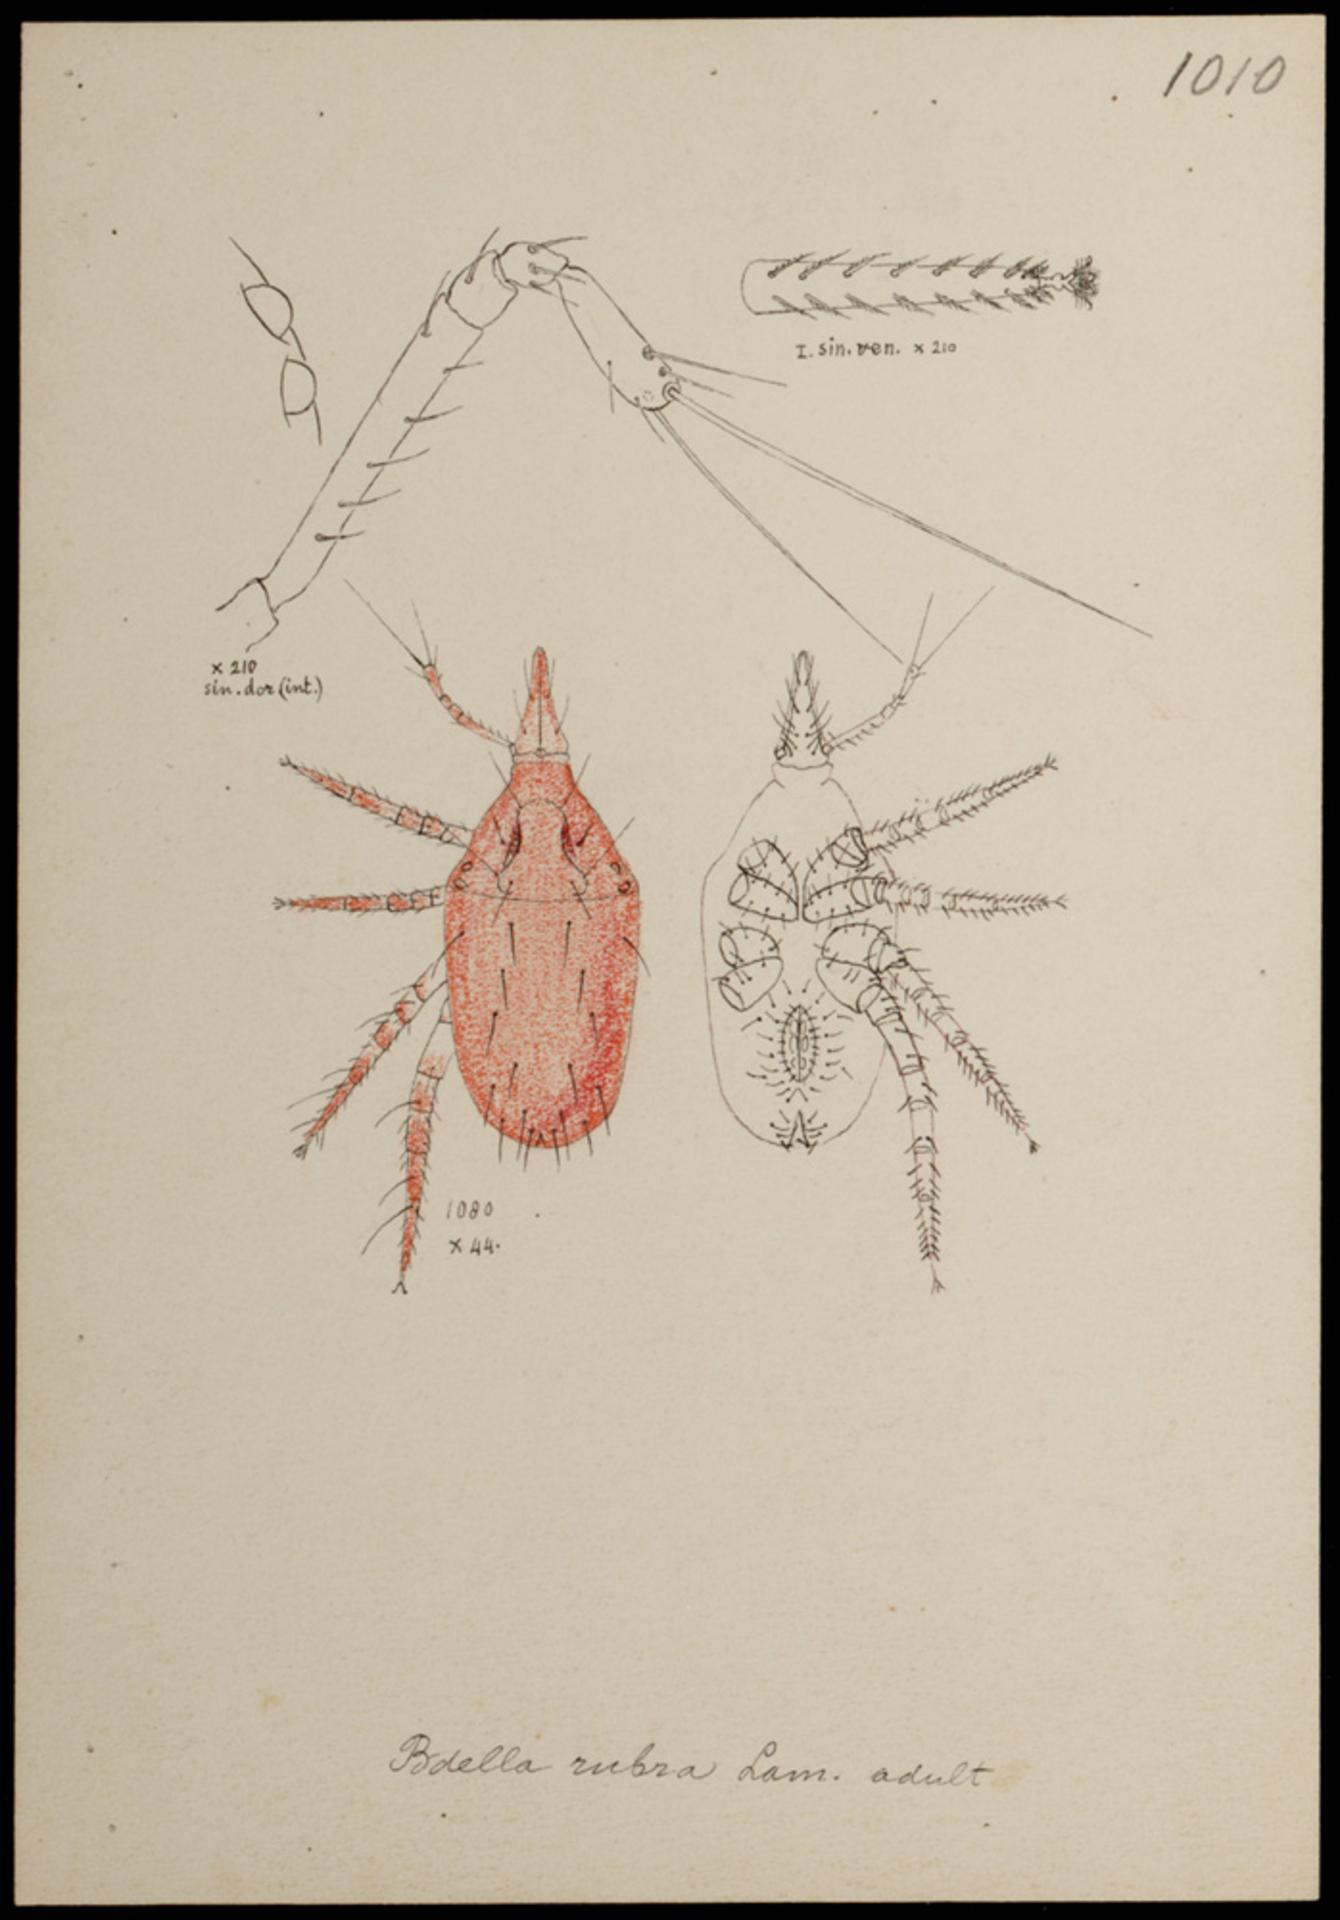 File:Naturalis Biodiversity Center - RMNH.ART.1472 - Bdella rubra (Lam.) - Mites - Collection Anthonie Cornelis Oudemans.jpeg - Wikimedia Commons